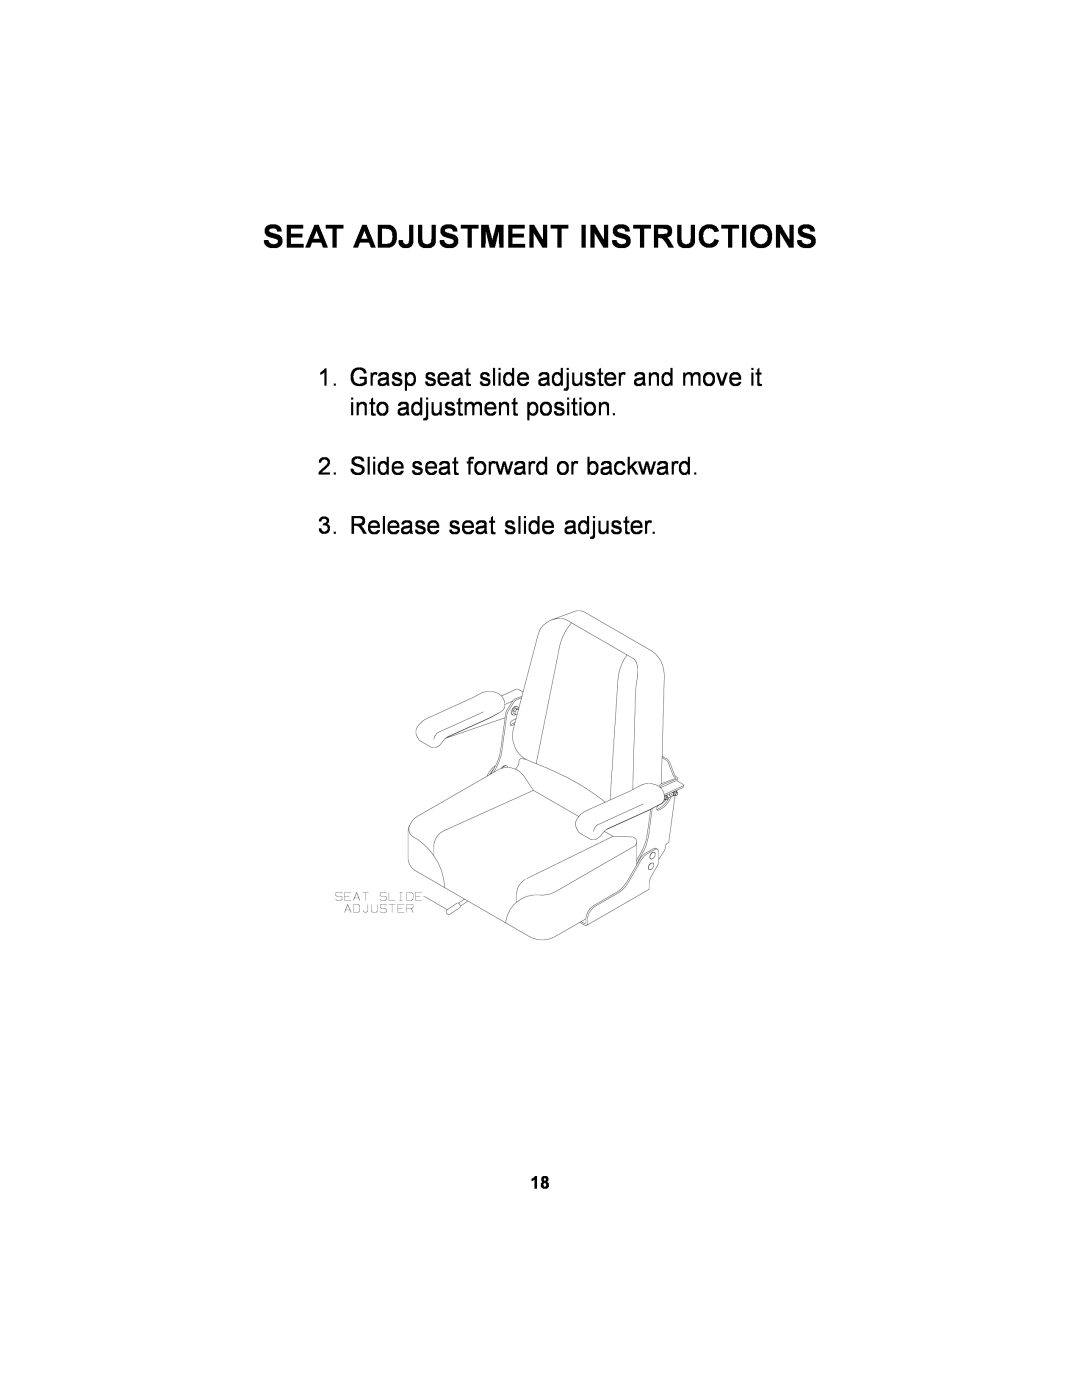 Dixon 18626-106 manual Seat Adjustment Instructions, Grasp seat slide adjuster and move it into adjustment position 